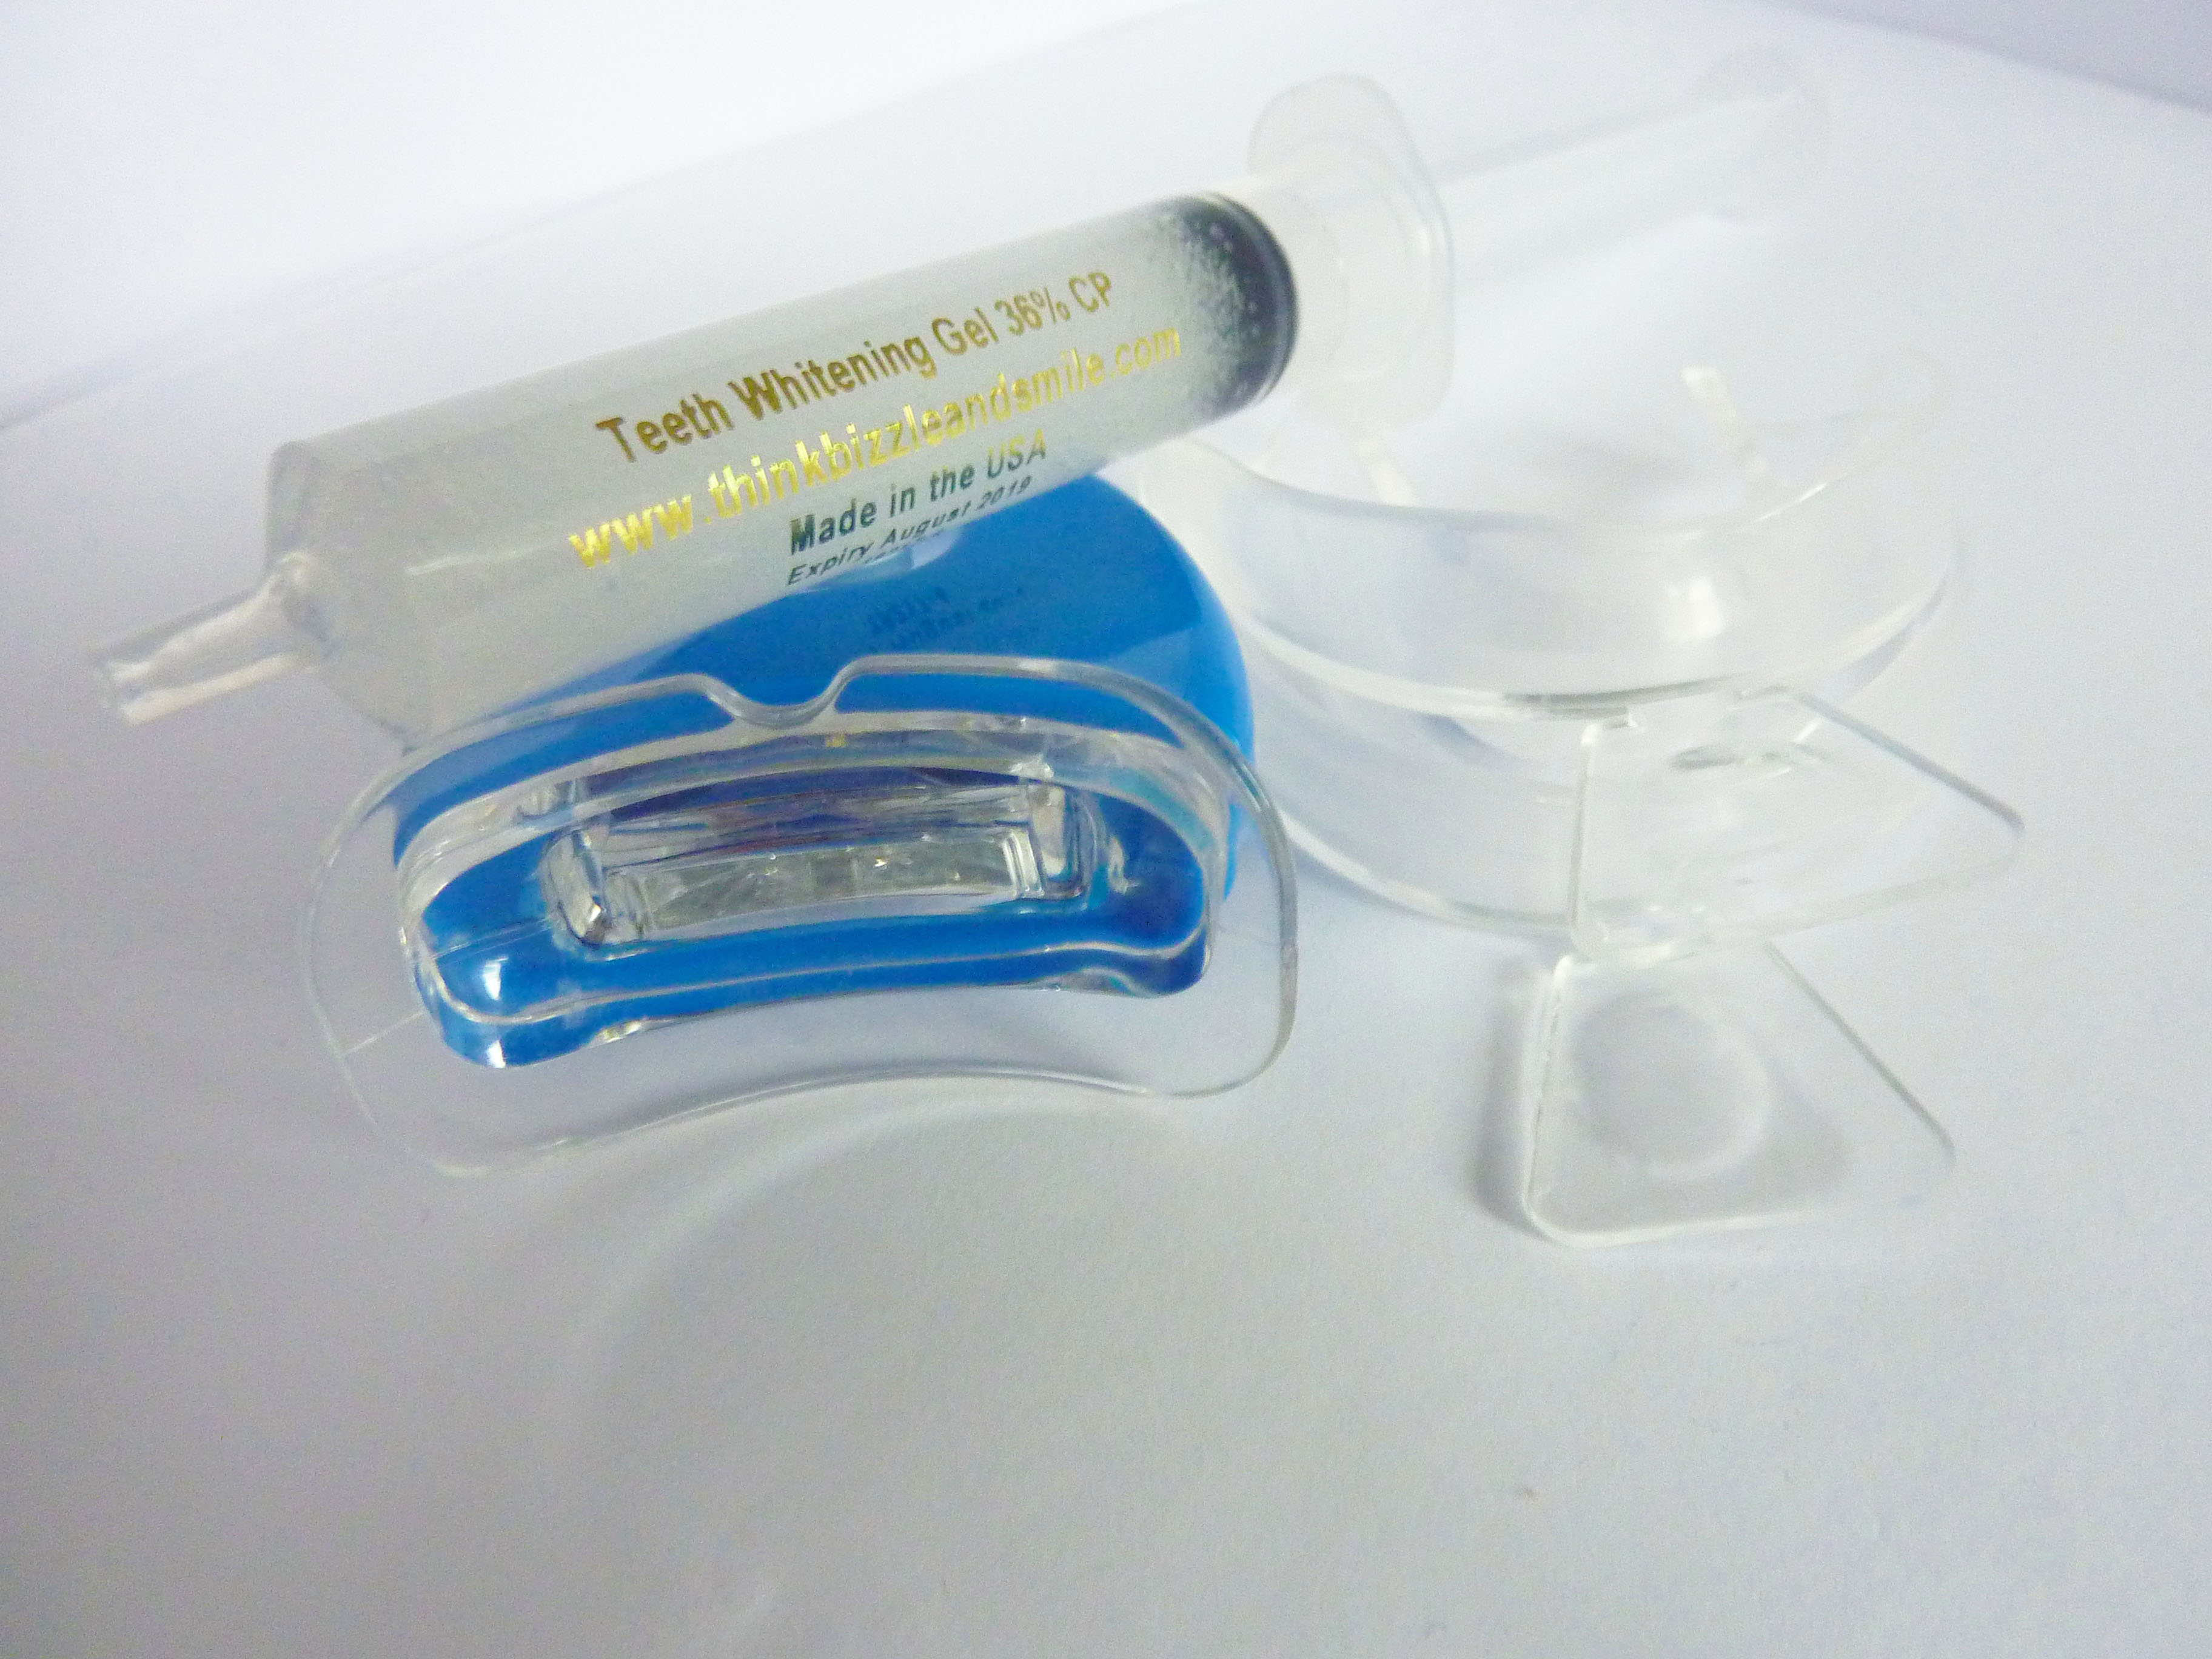 Deluxe single syringe teeth whitening kit